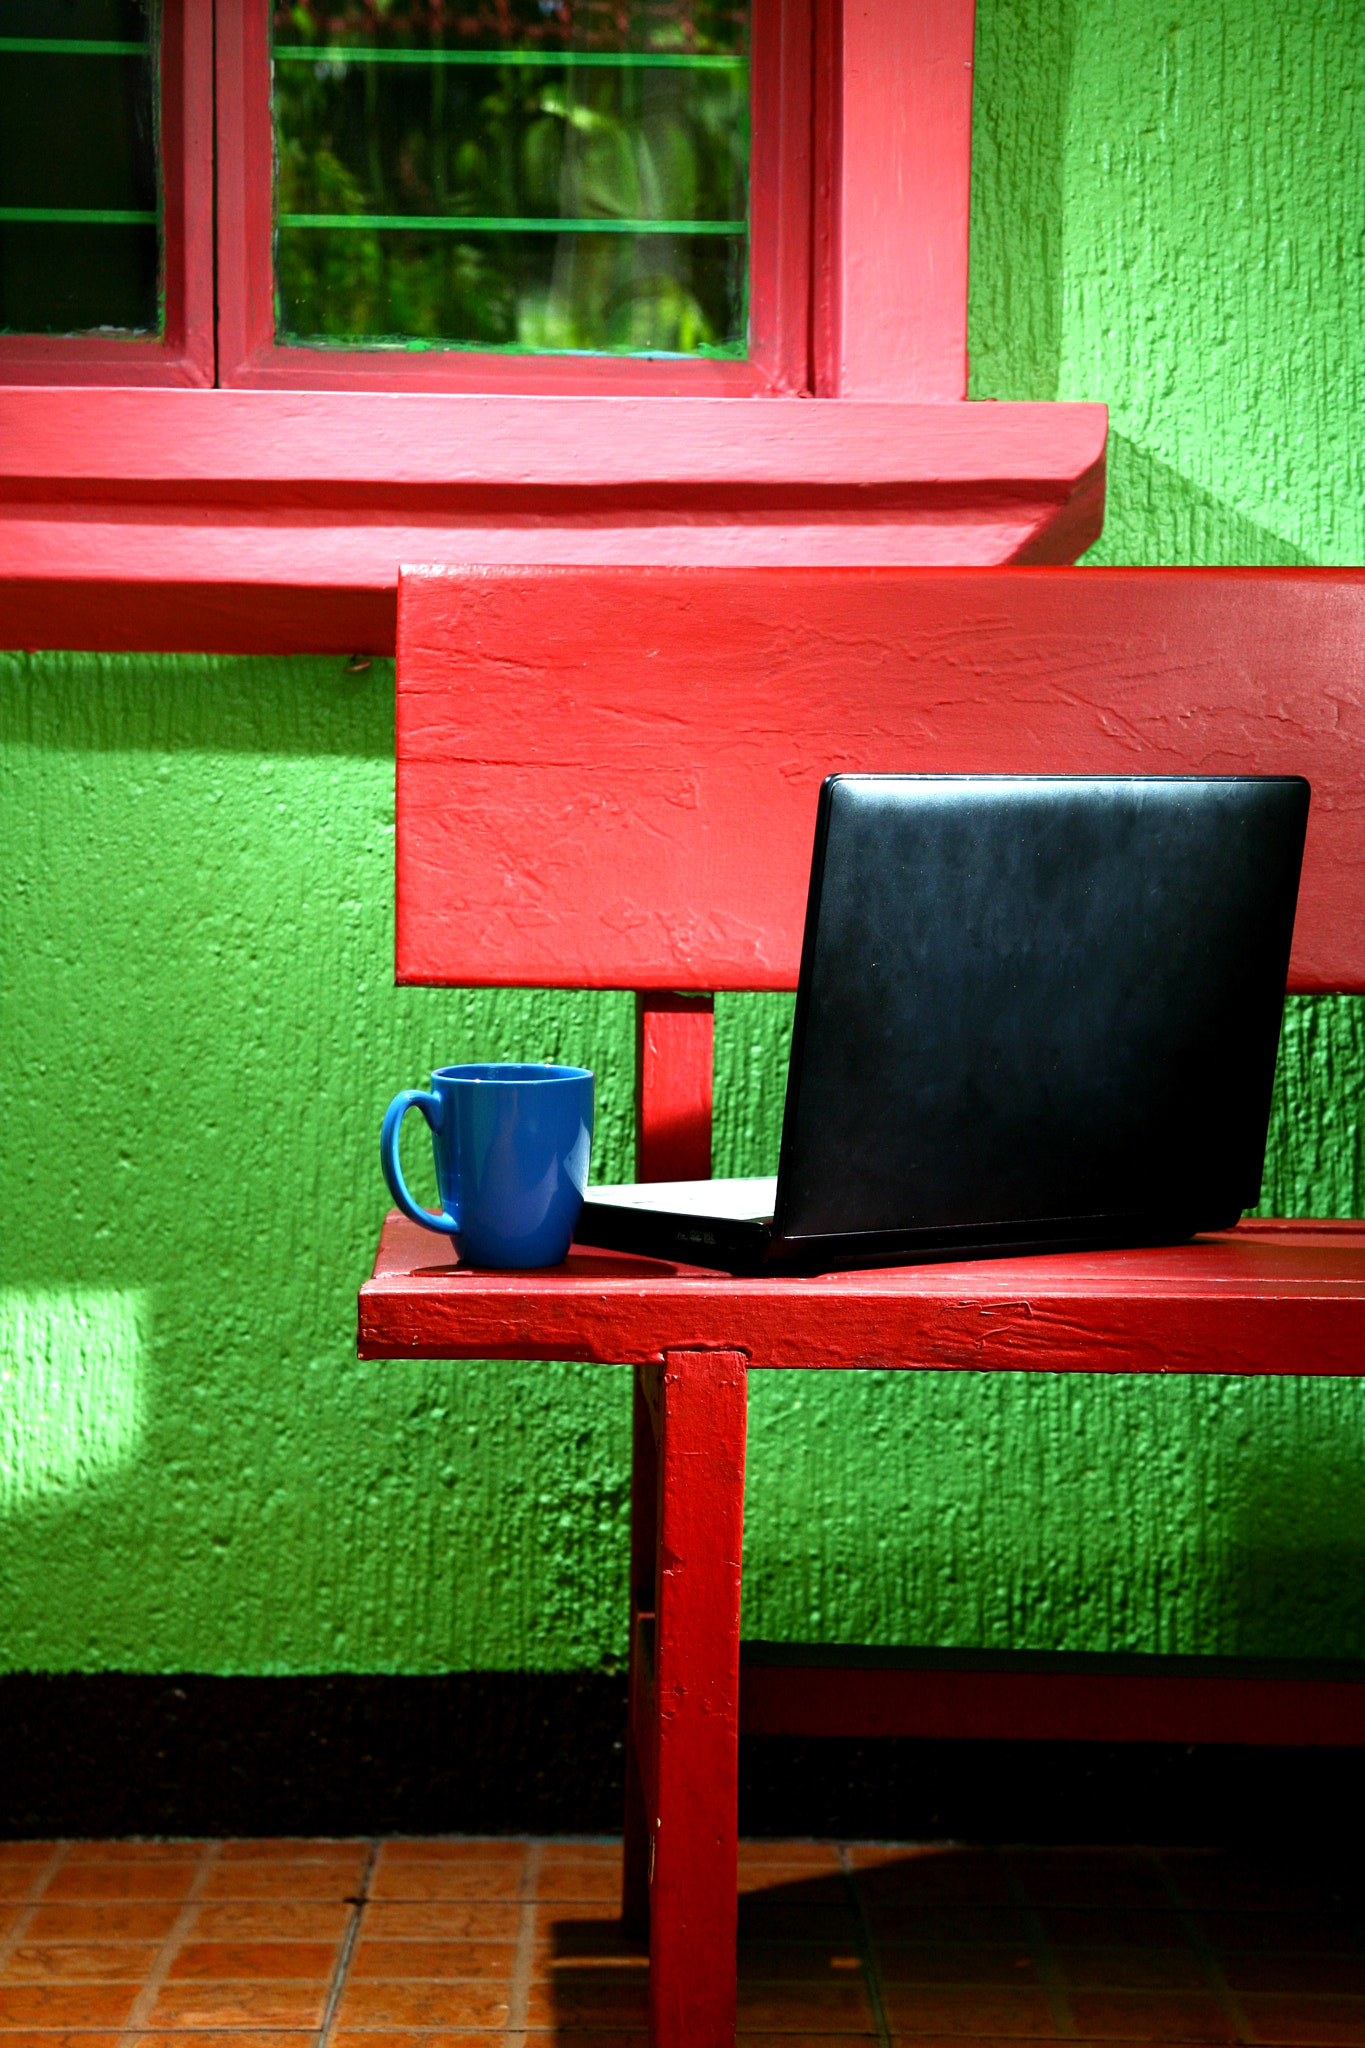 coffee mug and laptop computer on a bench